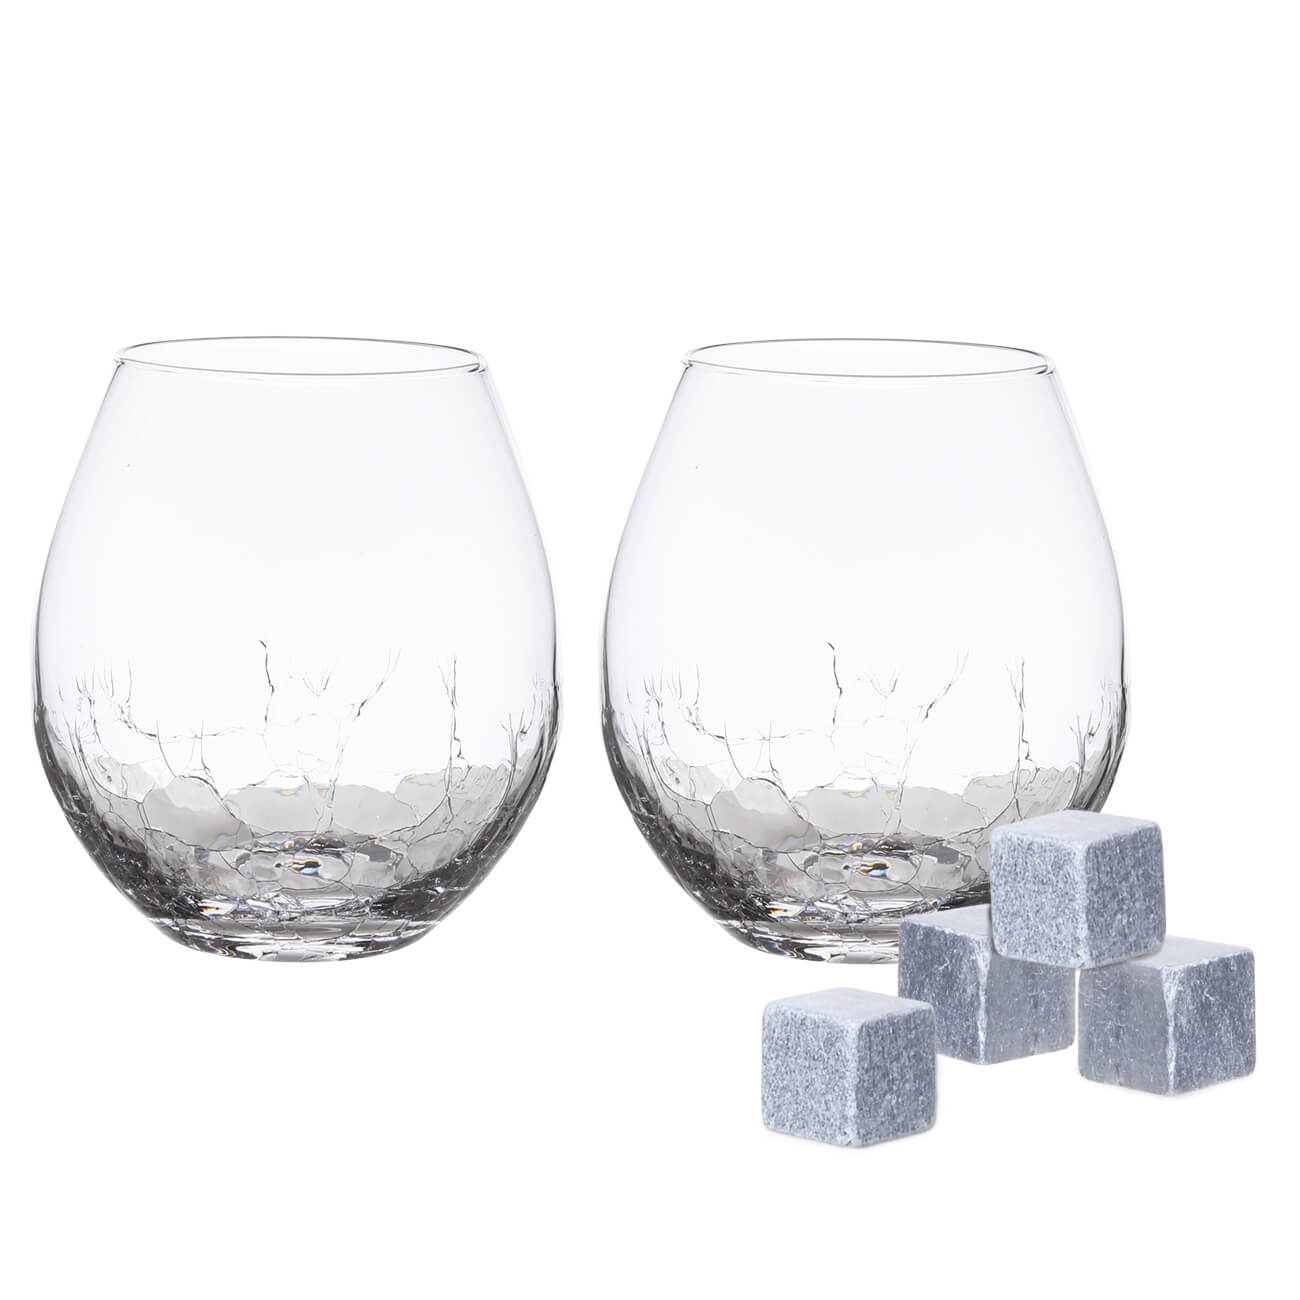 Набор для виски, 2 перс, 6 пр, стаканы/кубики, стекло/стеатит, Кракелюр, Ice набор для виски 2 перс 6 пр стаканы кубики стекло р мрамор zero